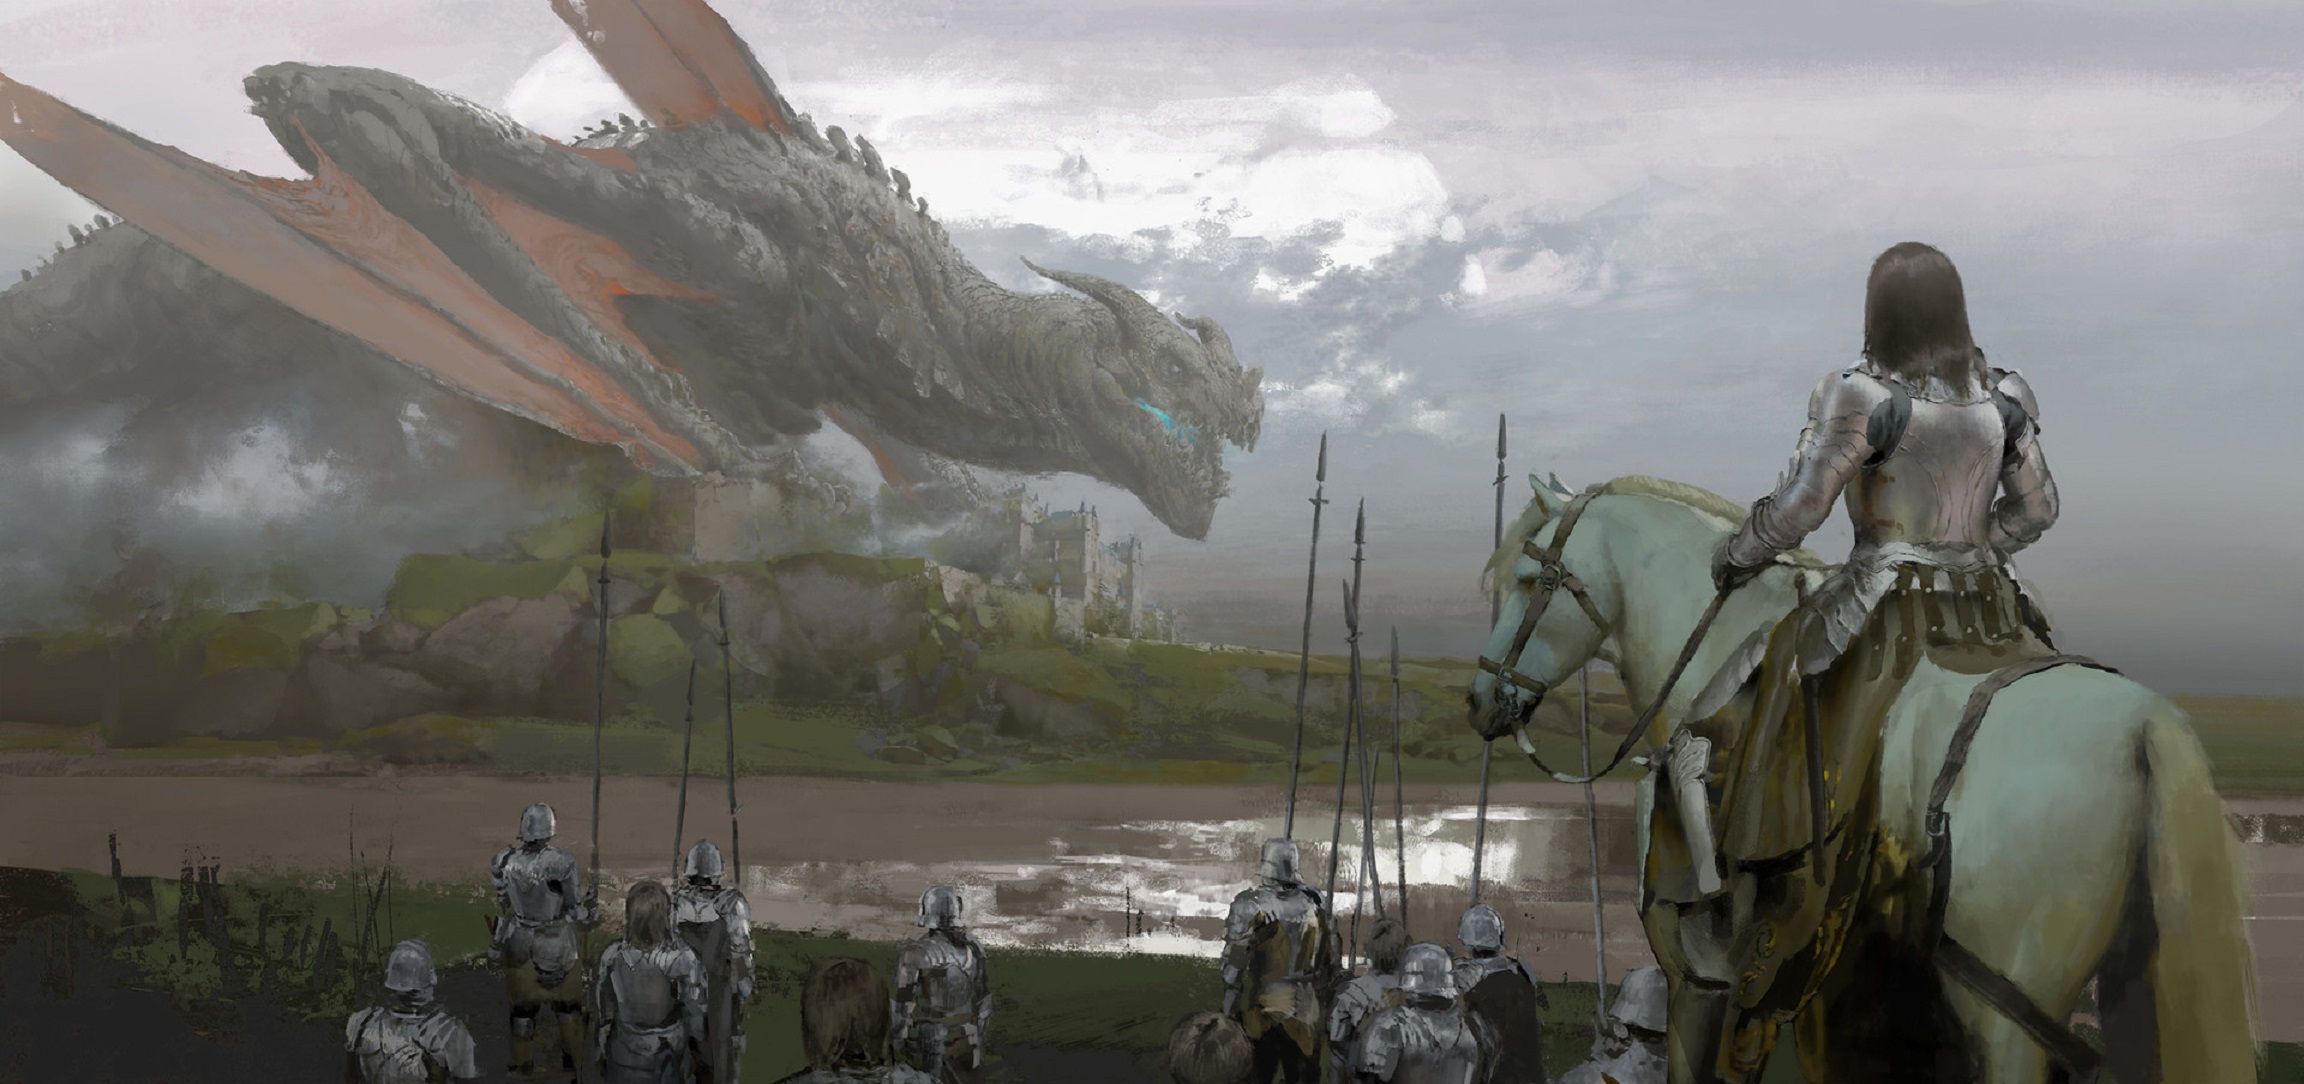 General 2304x1084 artwork army medieval soldier horse dragon illustration warrior digital art painting knight castle